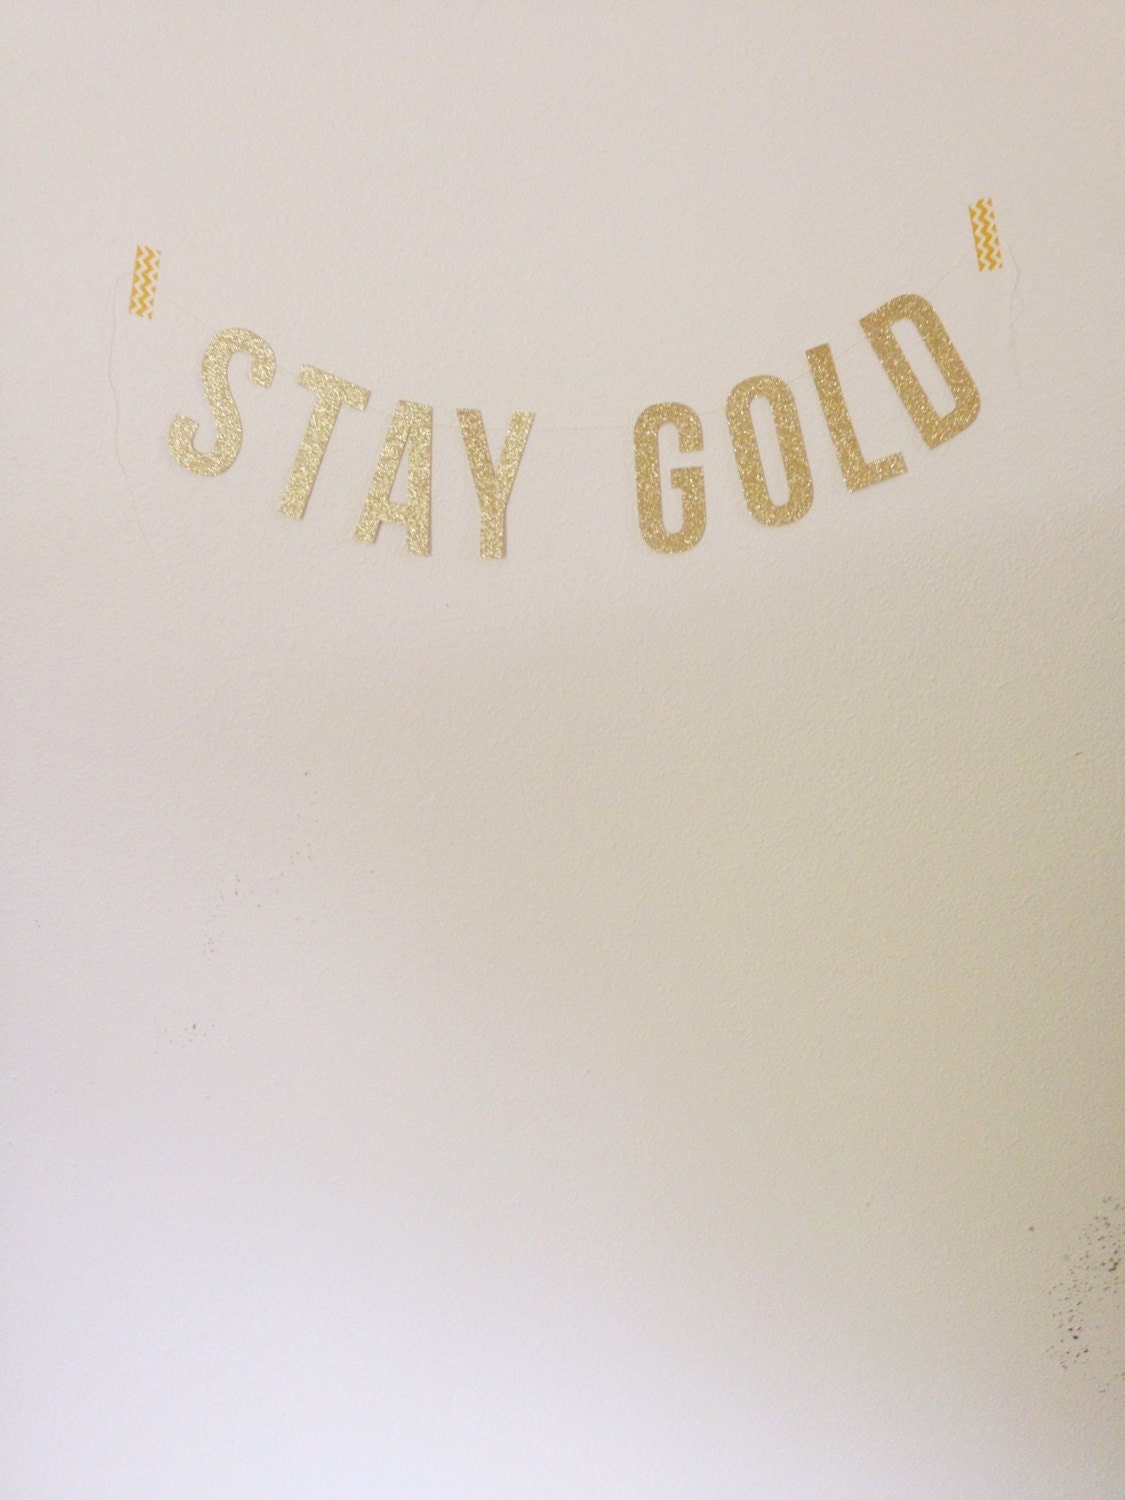 STAY GOLD Garland | Etsy